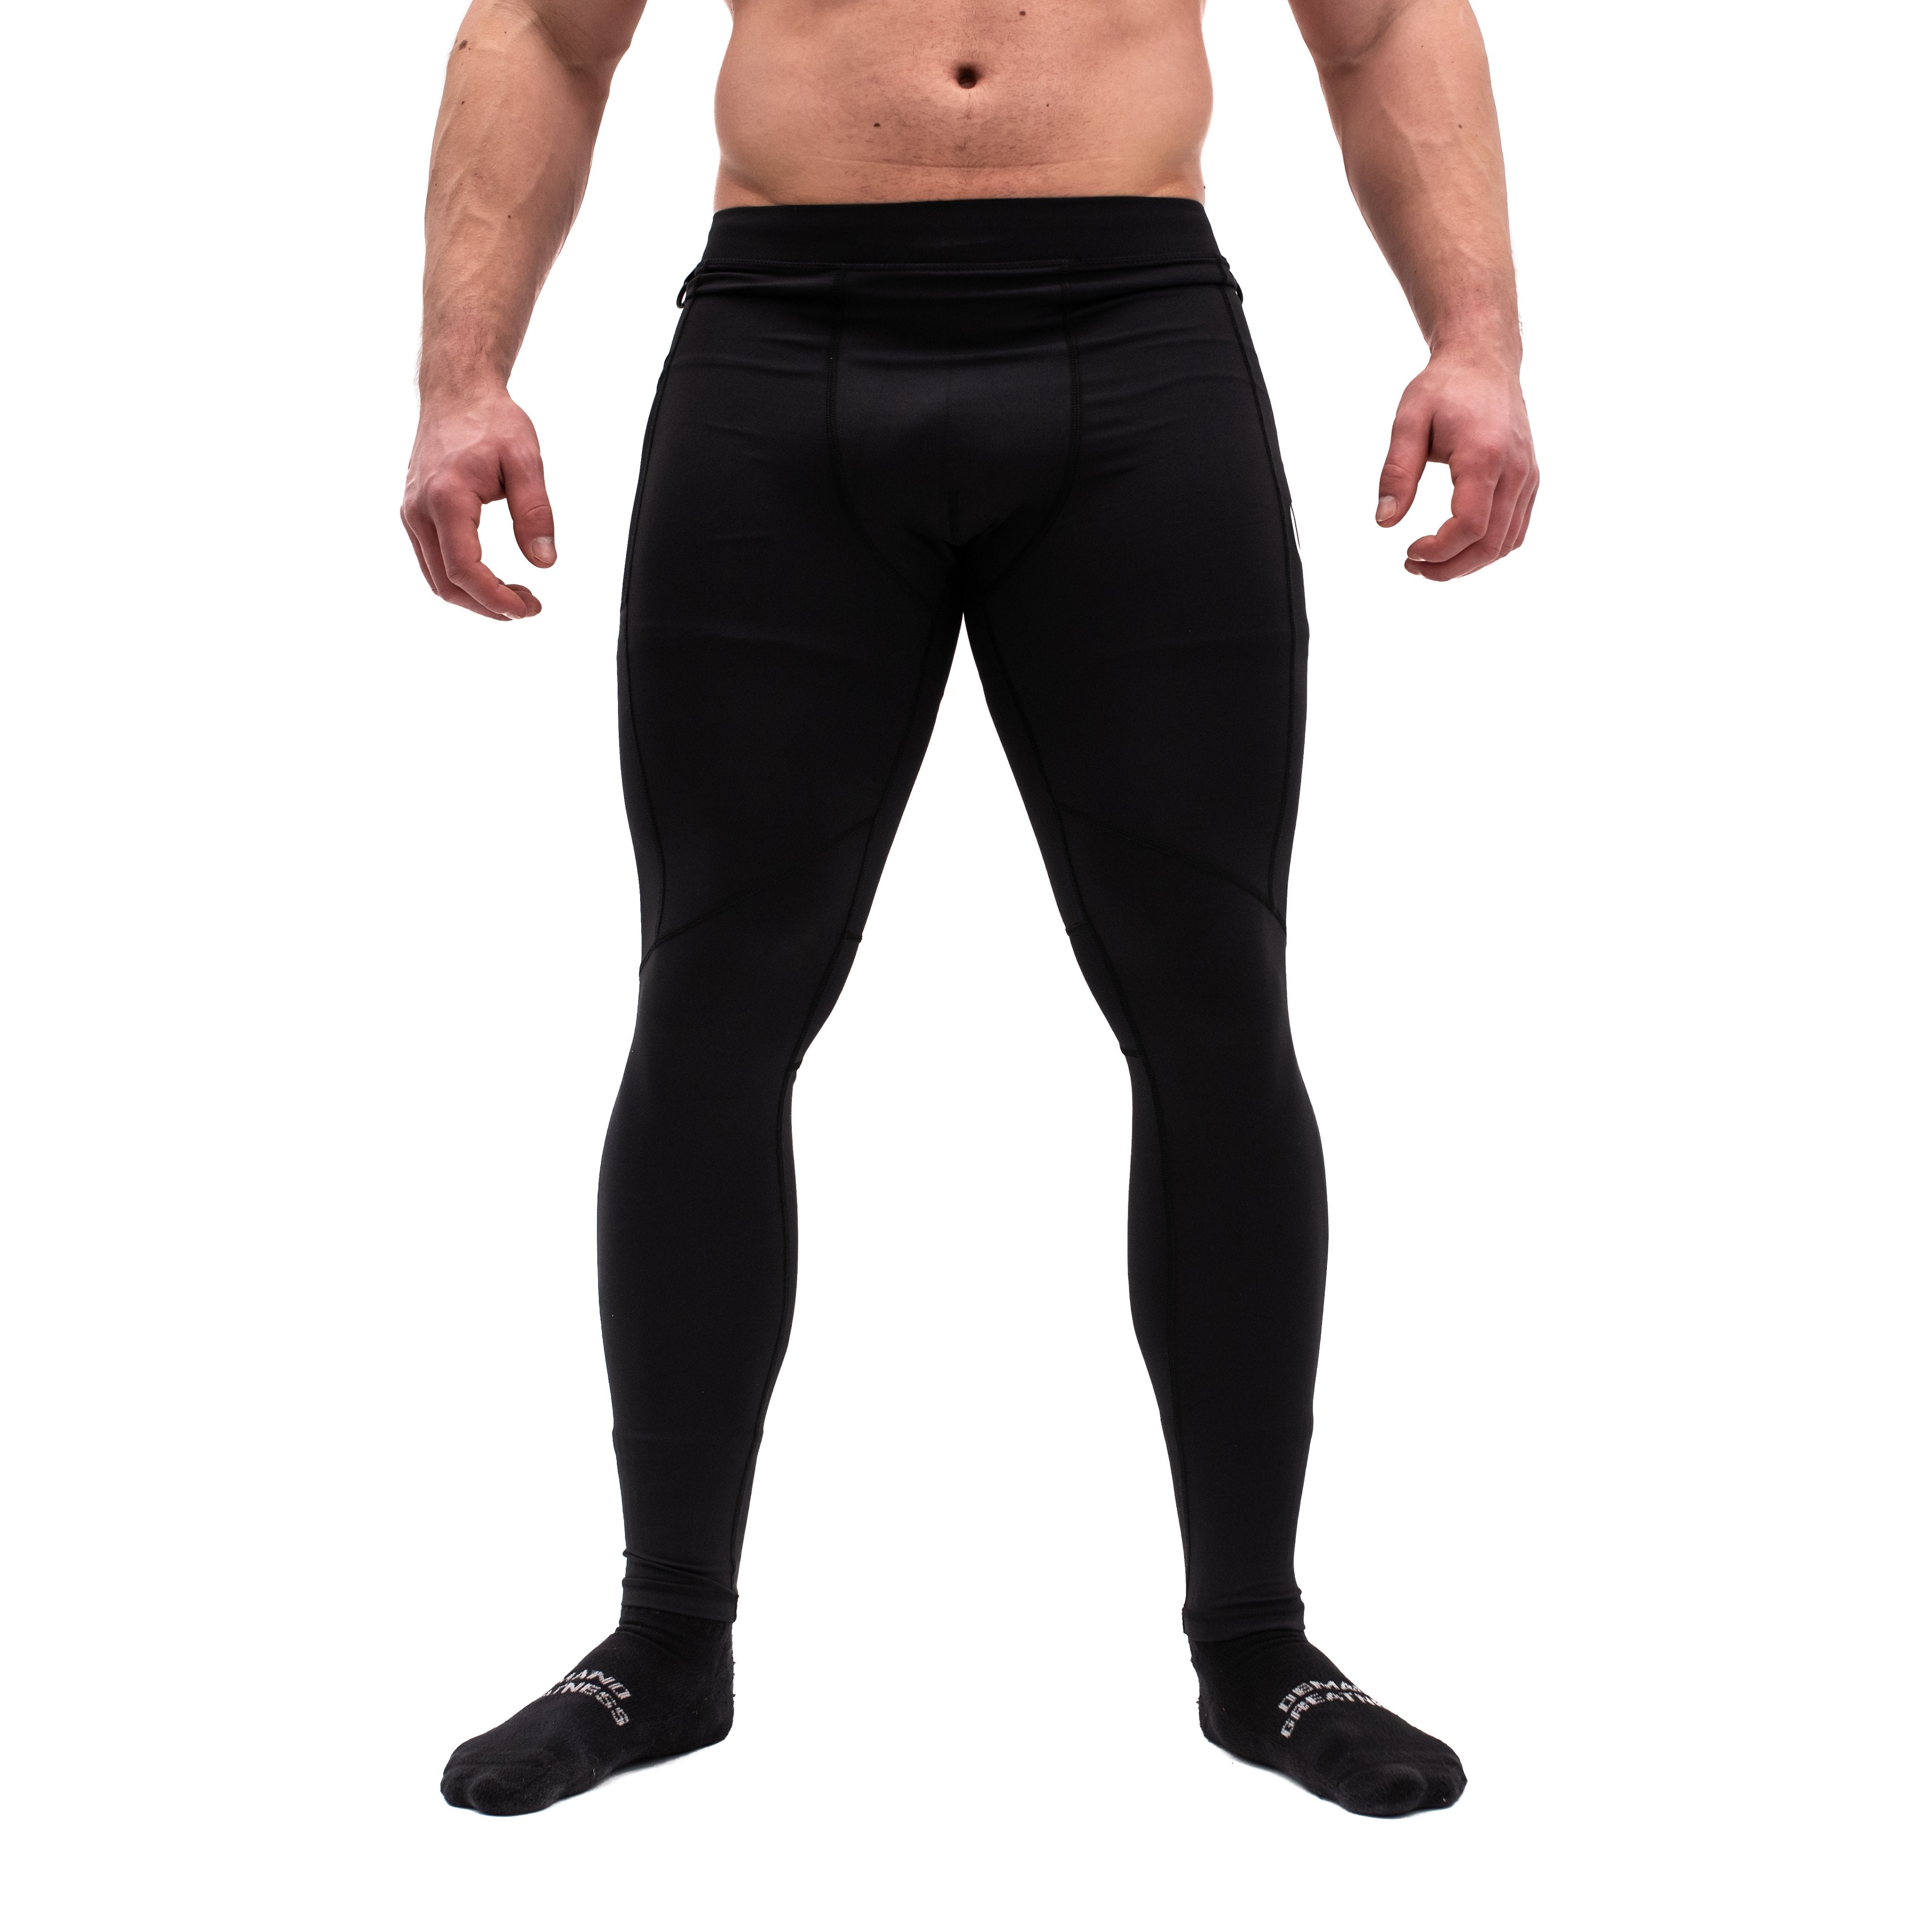 Buy Pro Gym Men's Nylon Compression Pants/Lower (Black, Small